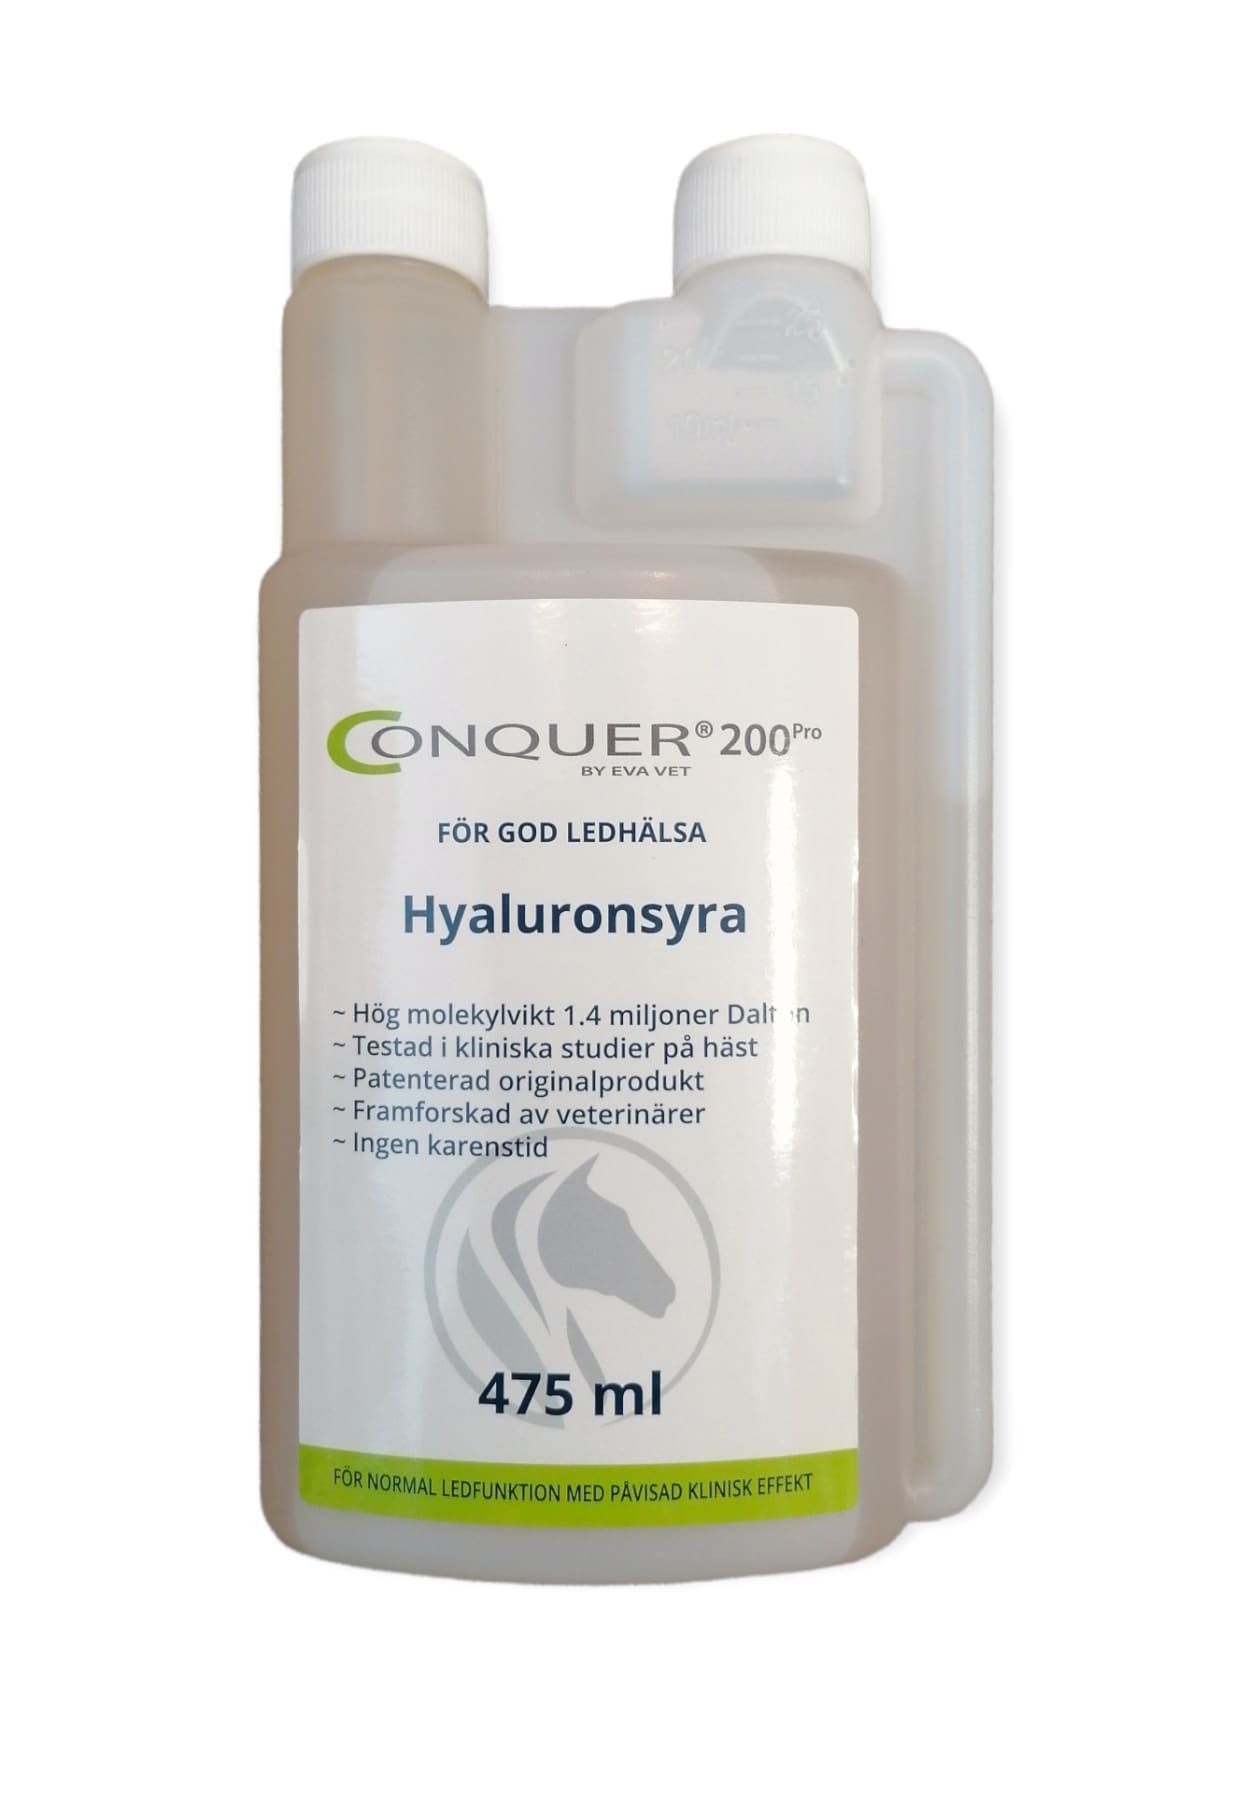 Conquer, hyaluronsyra - 475ml